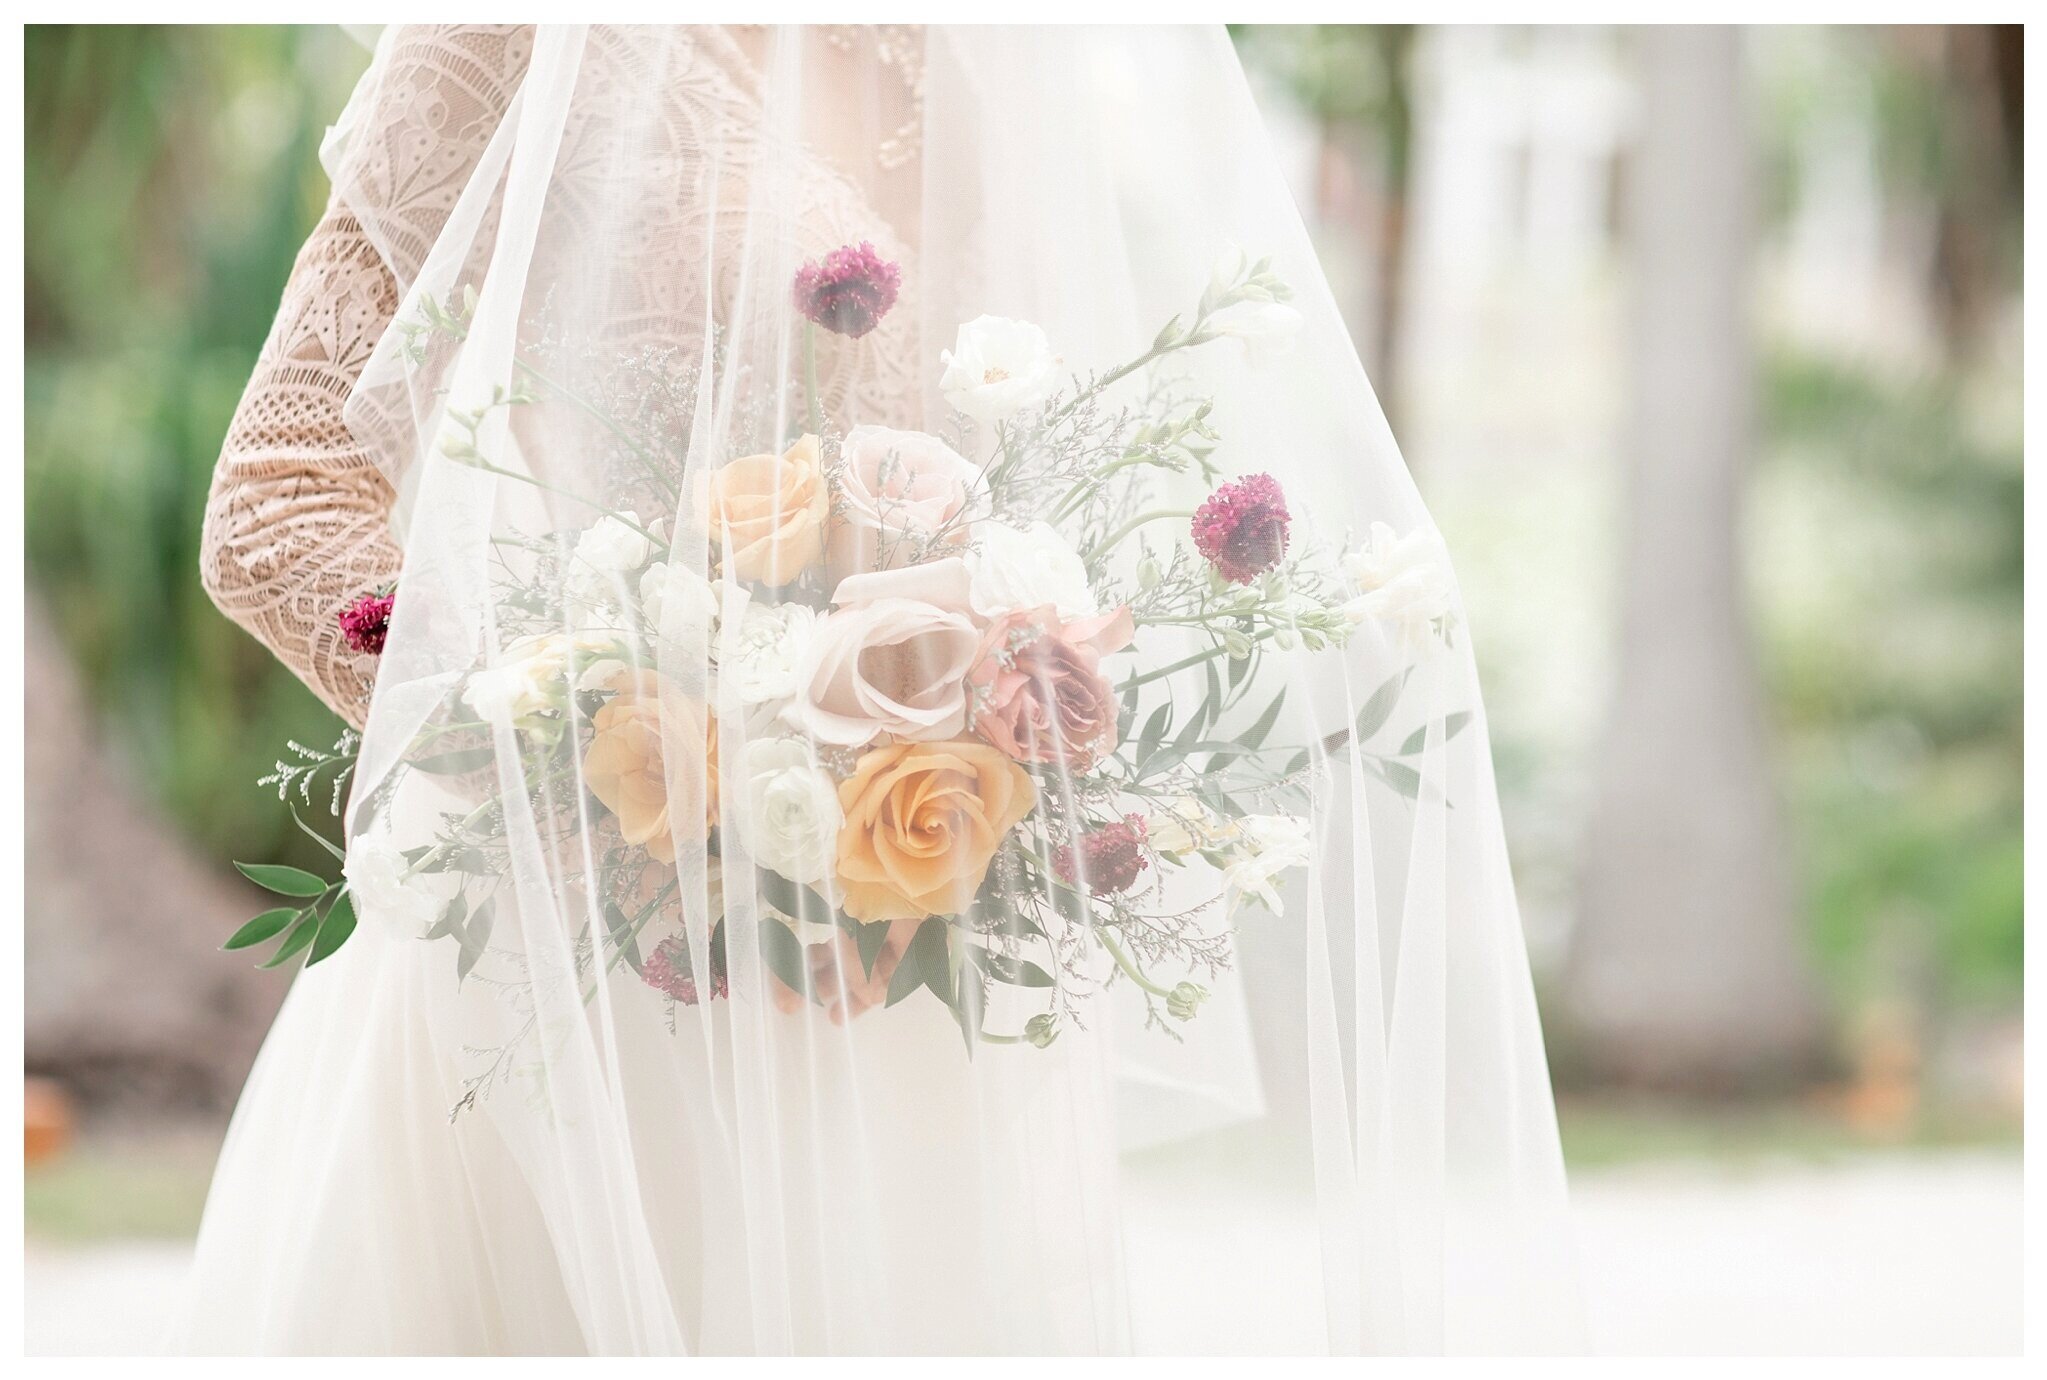 Veil and Wedding Bouquet